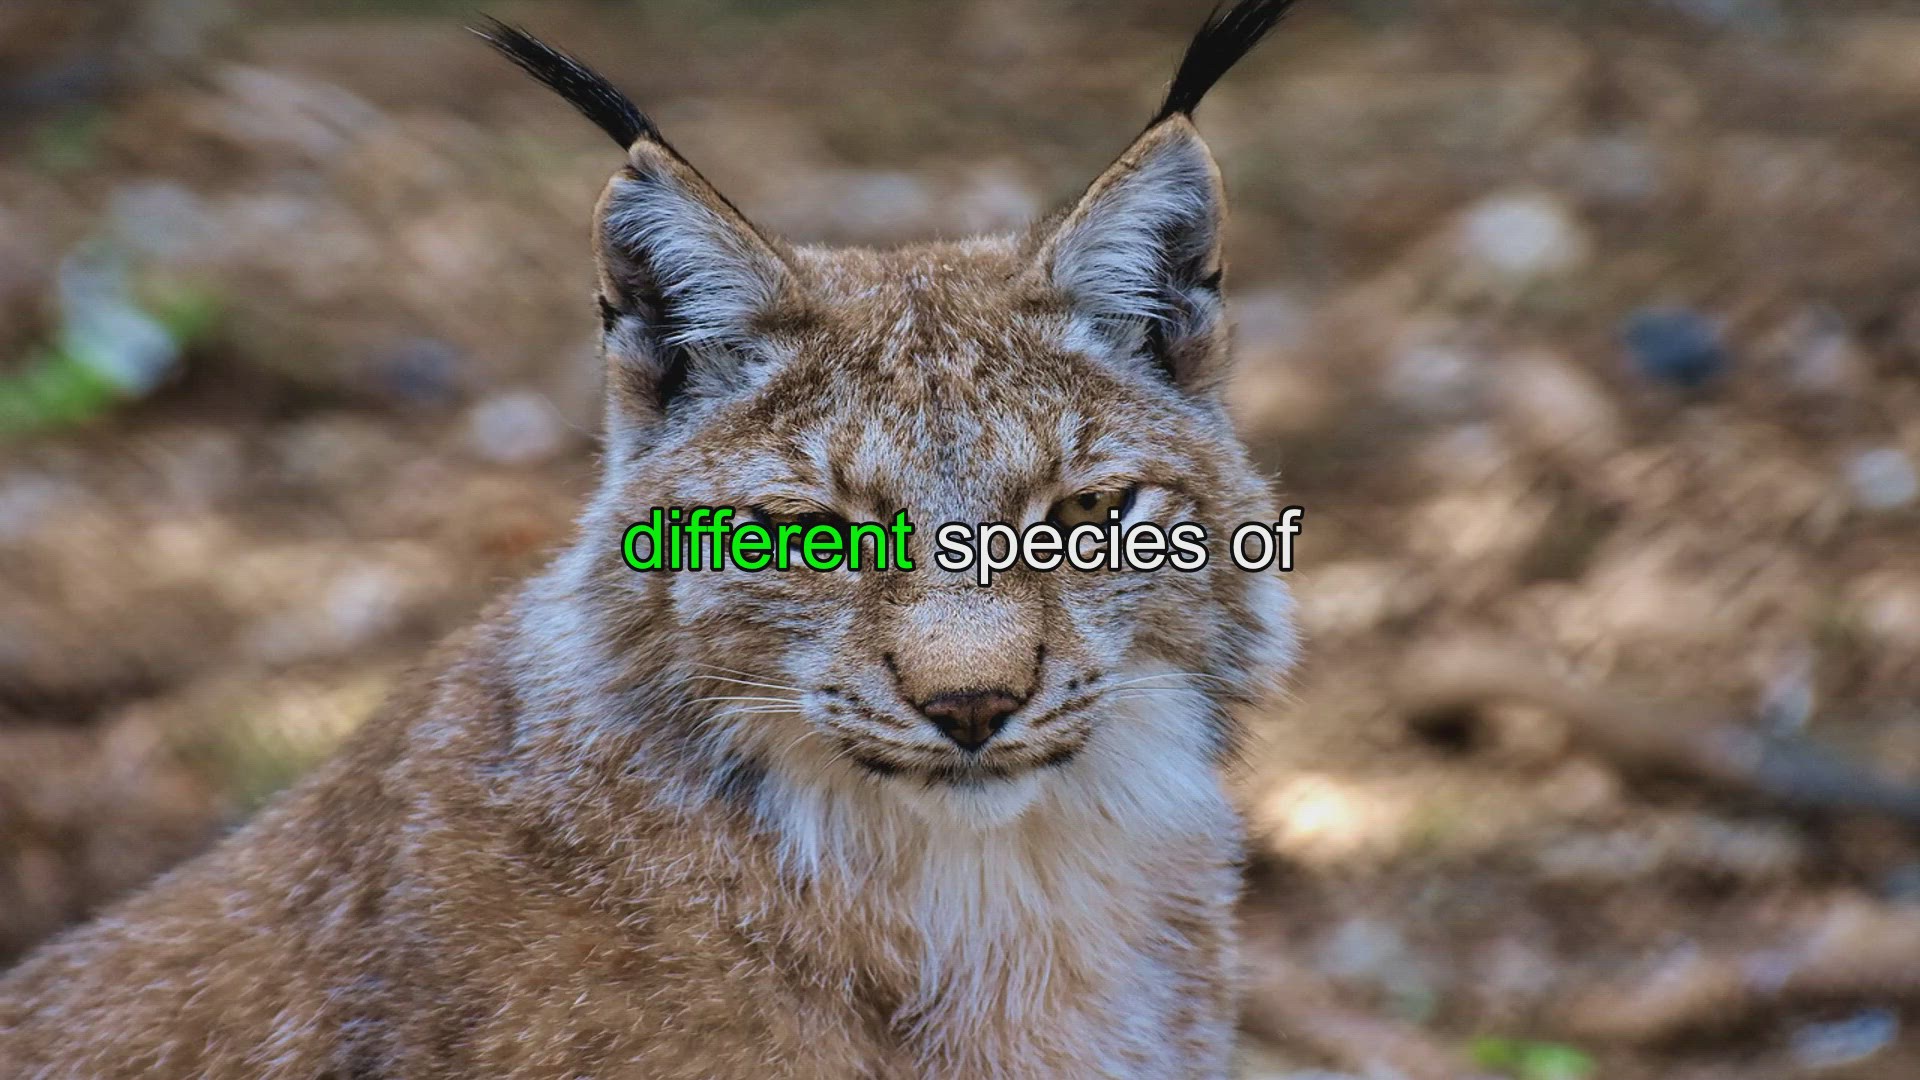 Lynx - Description, Habitat, Image, Diet, and Interesting Facts